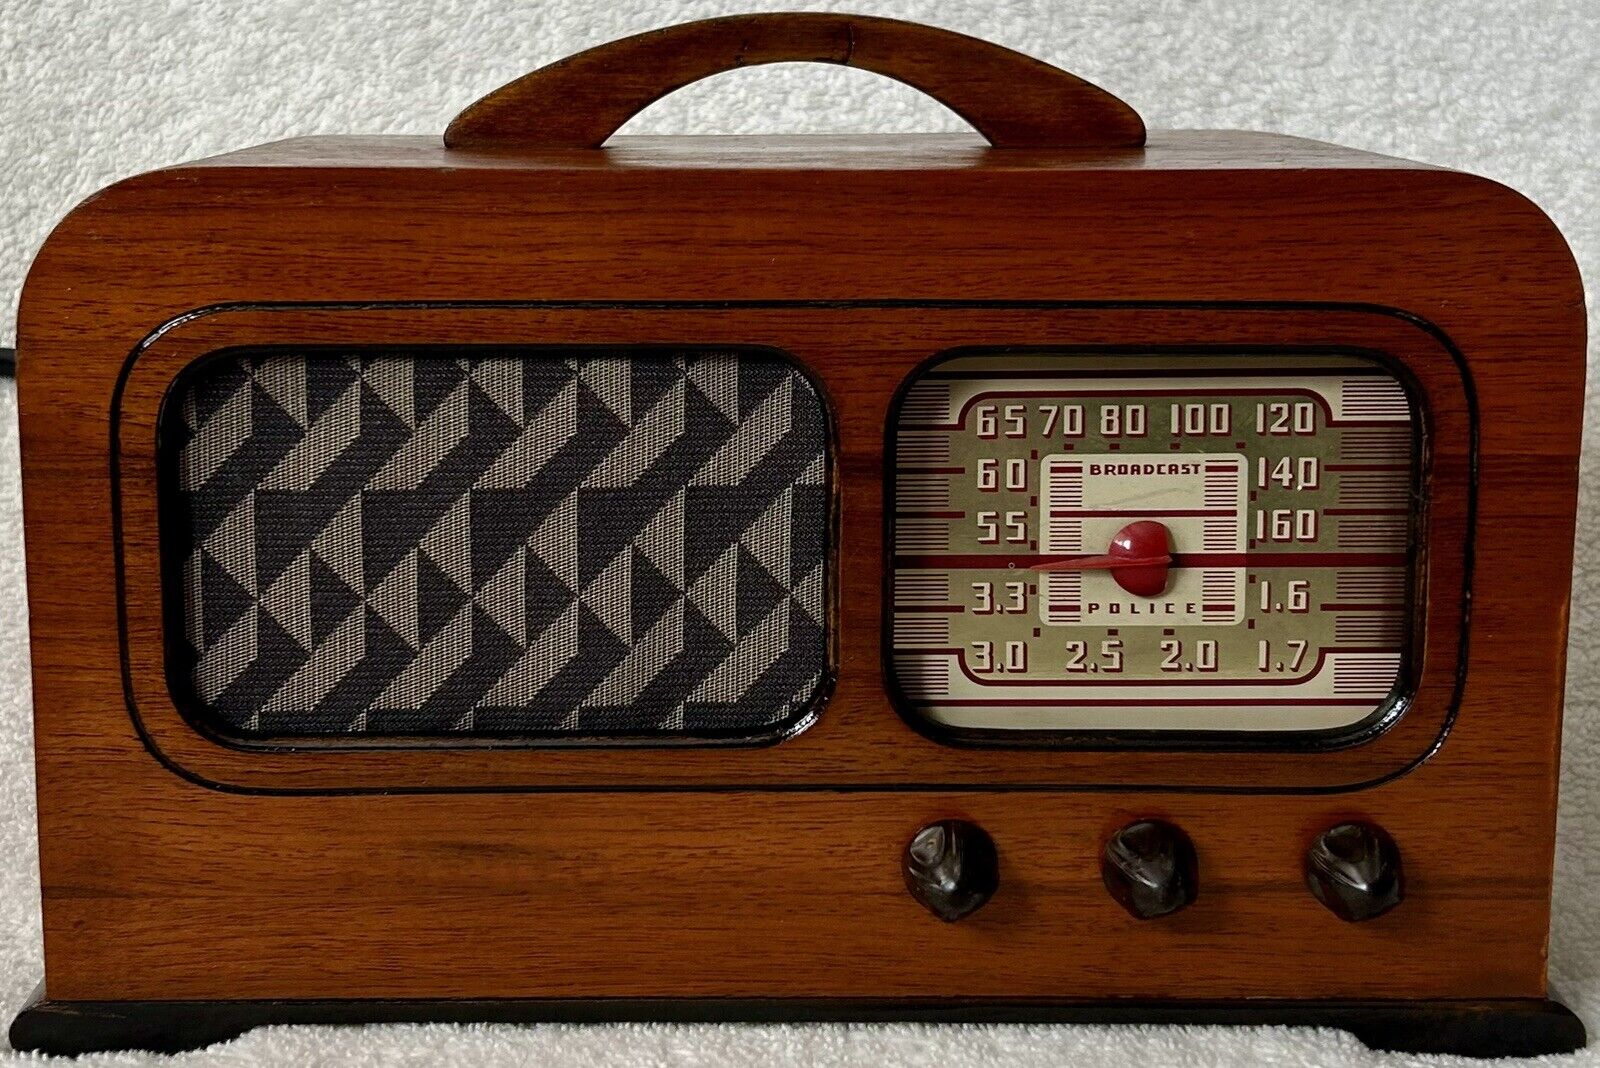 Old Antique Wood Philco tube radio 41 220 Vintage. With Bluetooth